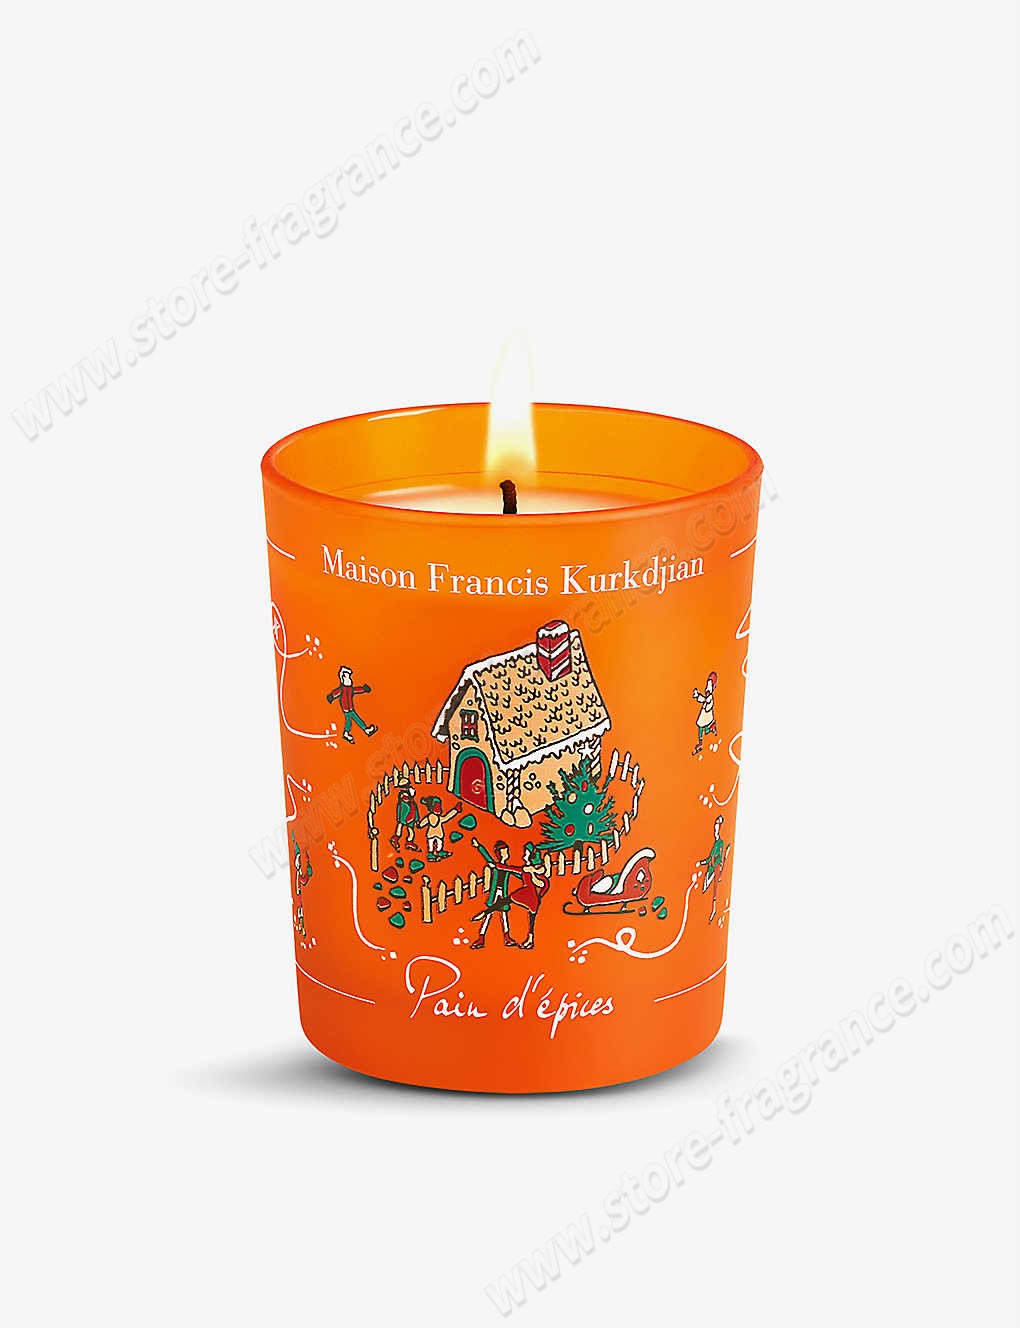 MAISON FRANCIS KURKDJIAN/Pain D’epices scented candle 190g ✿ Discount Store - MAISON FRANCIS KURKDJIAN/Pain D’epices scented candle 190g ✿ Discount Store